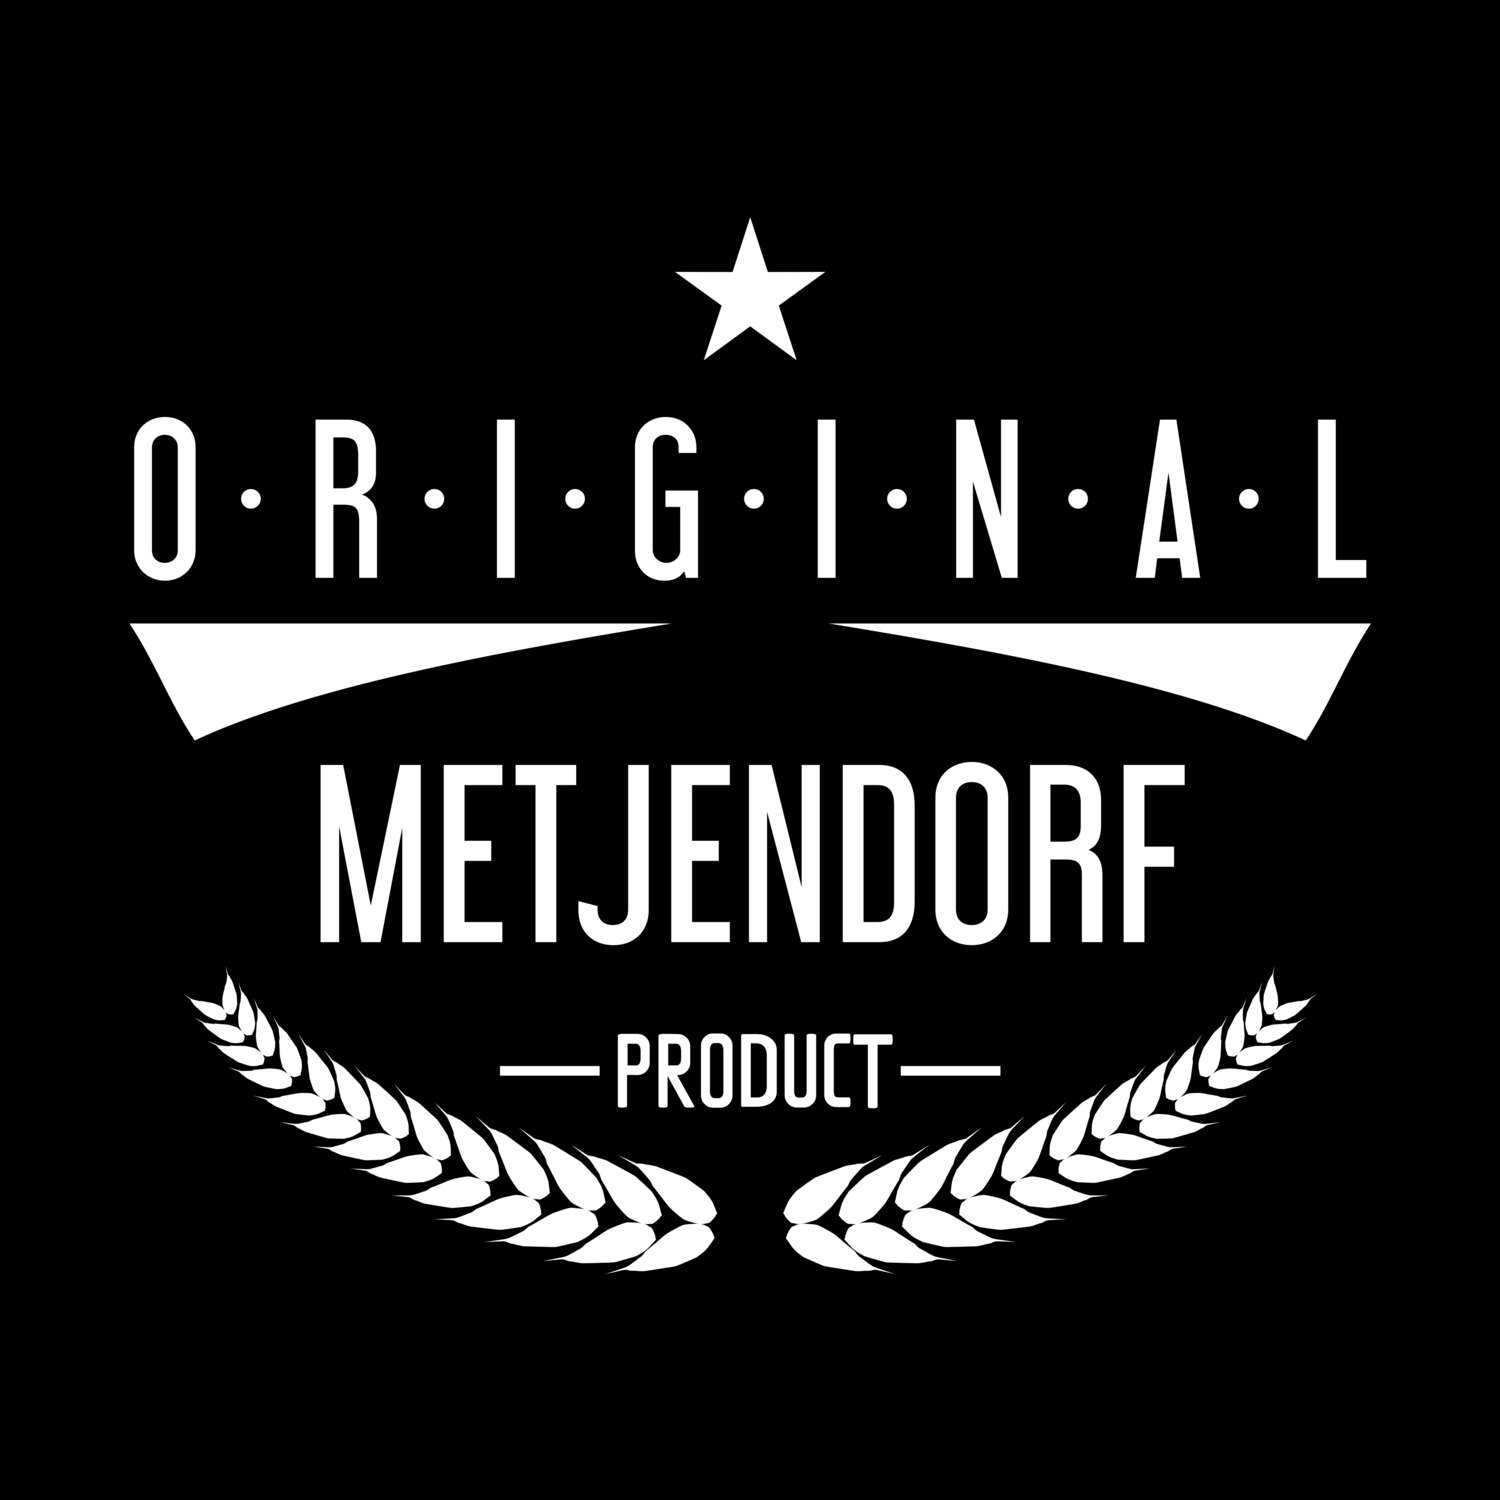 Metjendorf T-Shirt »Original Product«